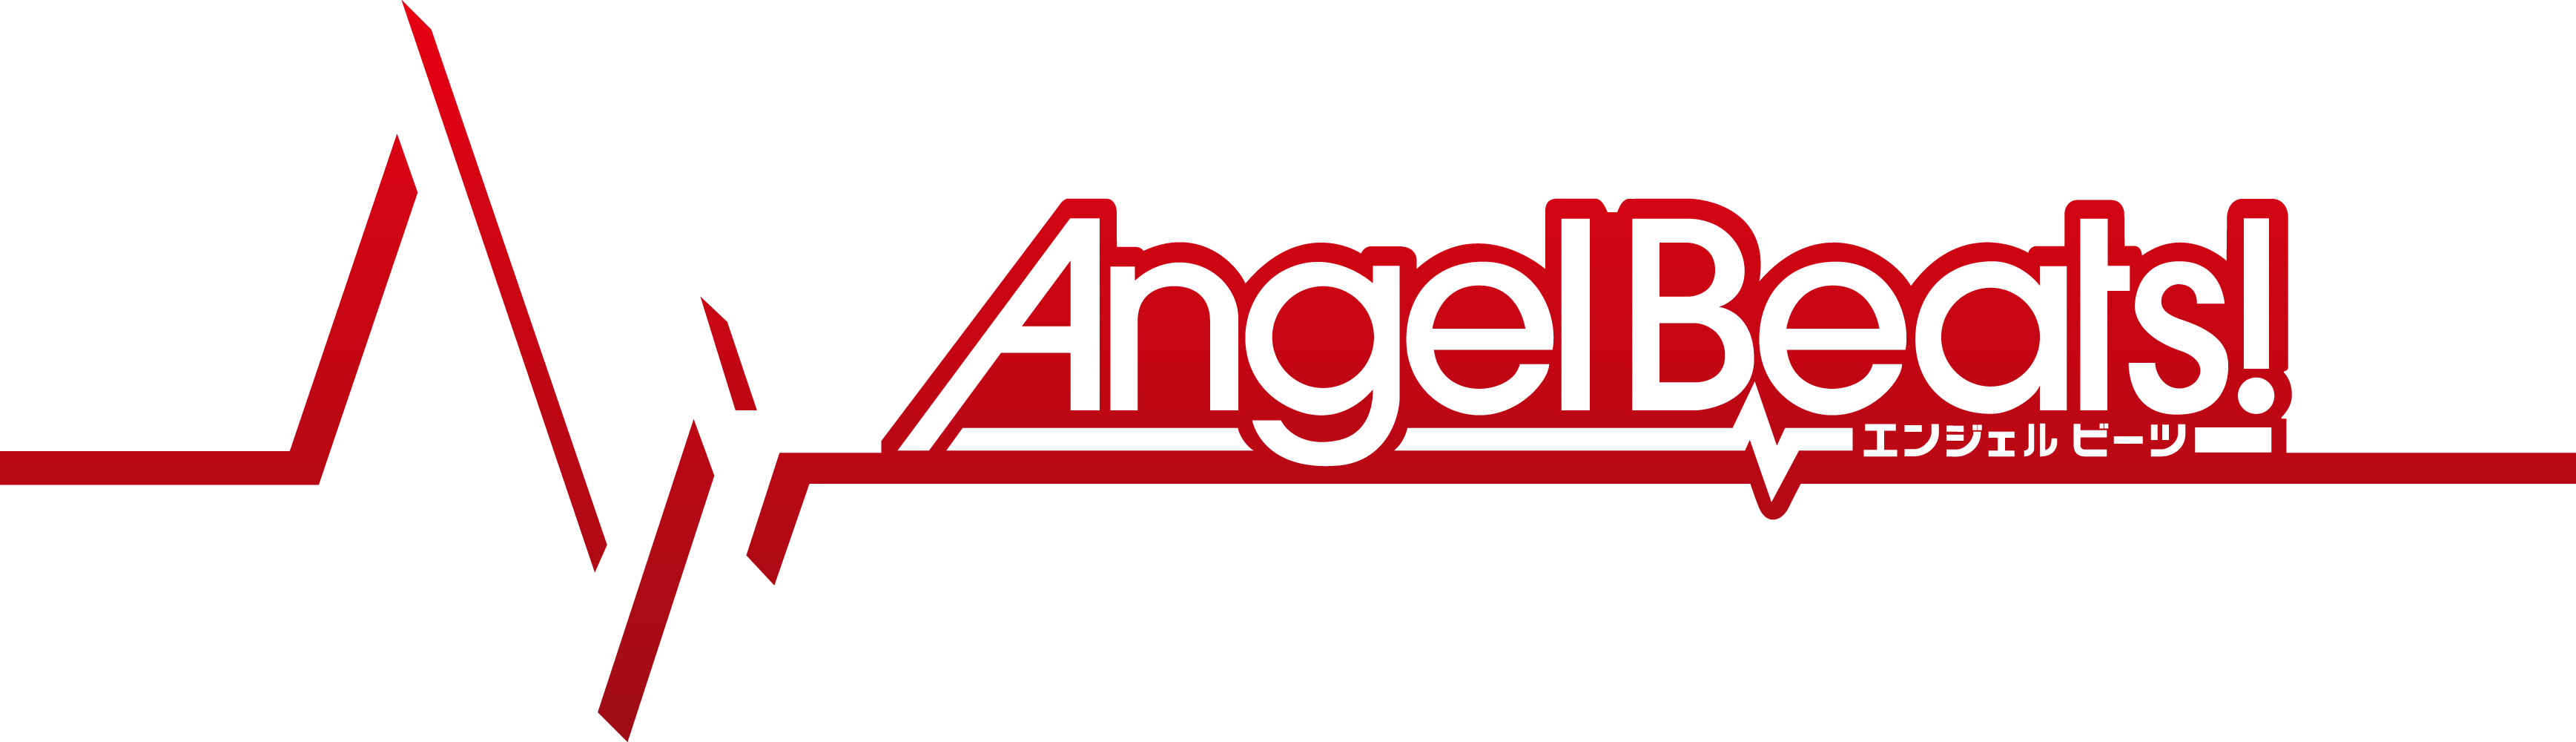 angel beats! png logo #5029